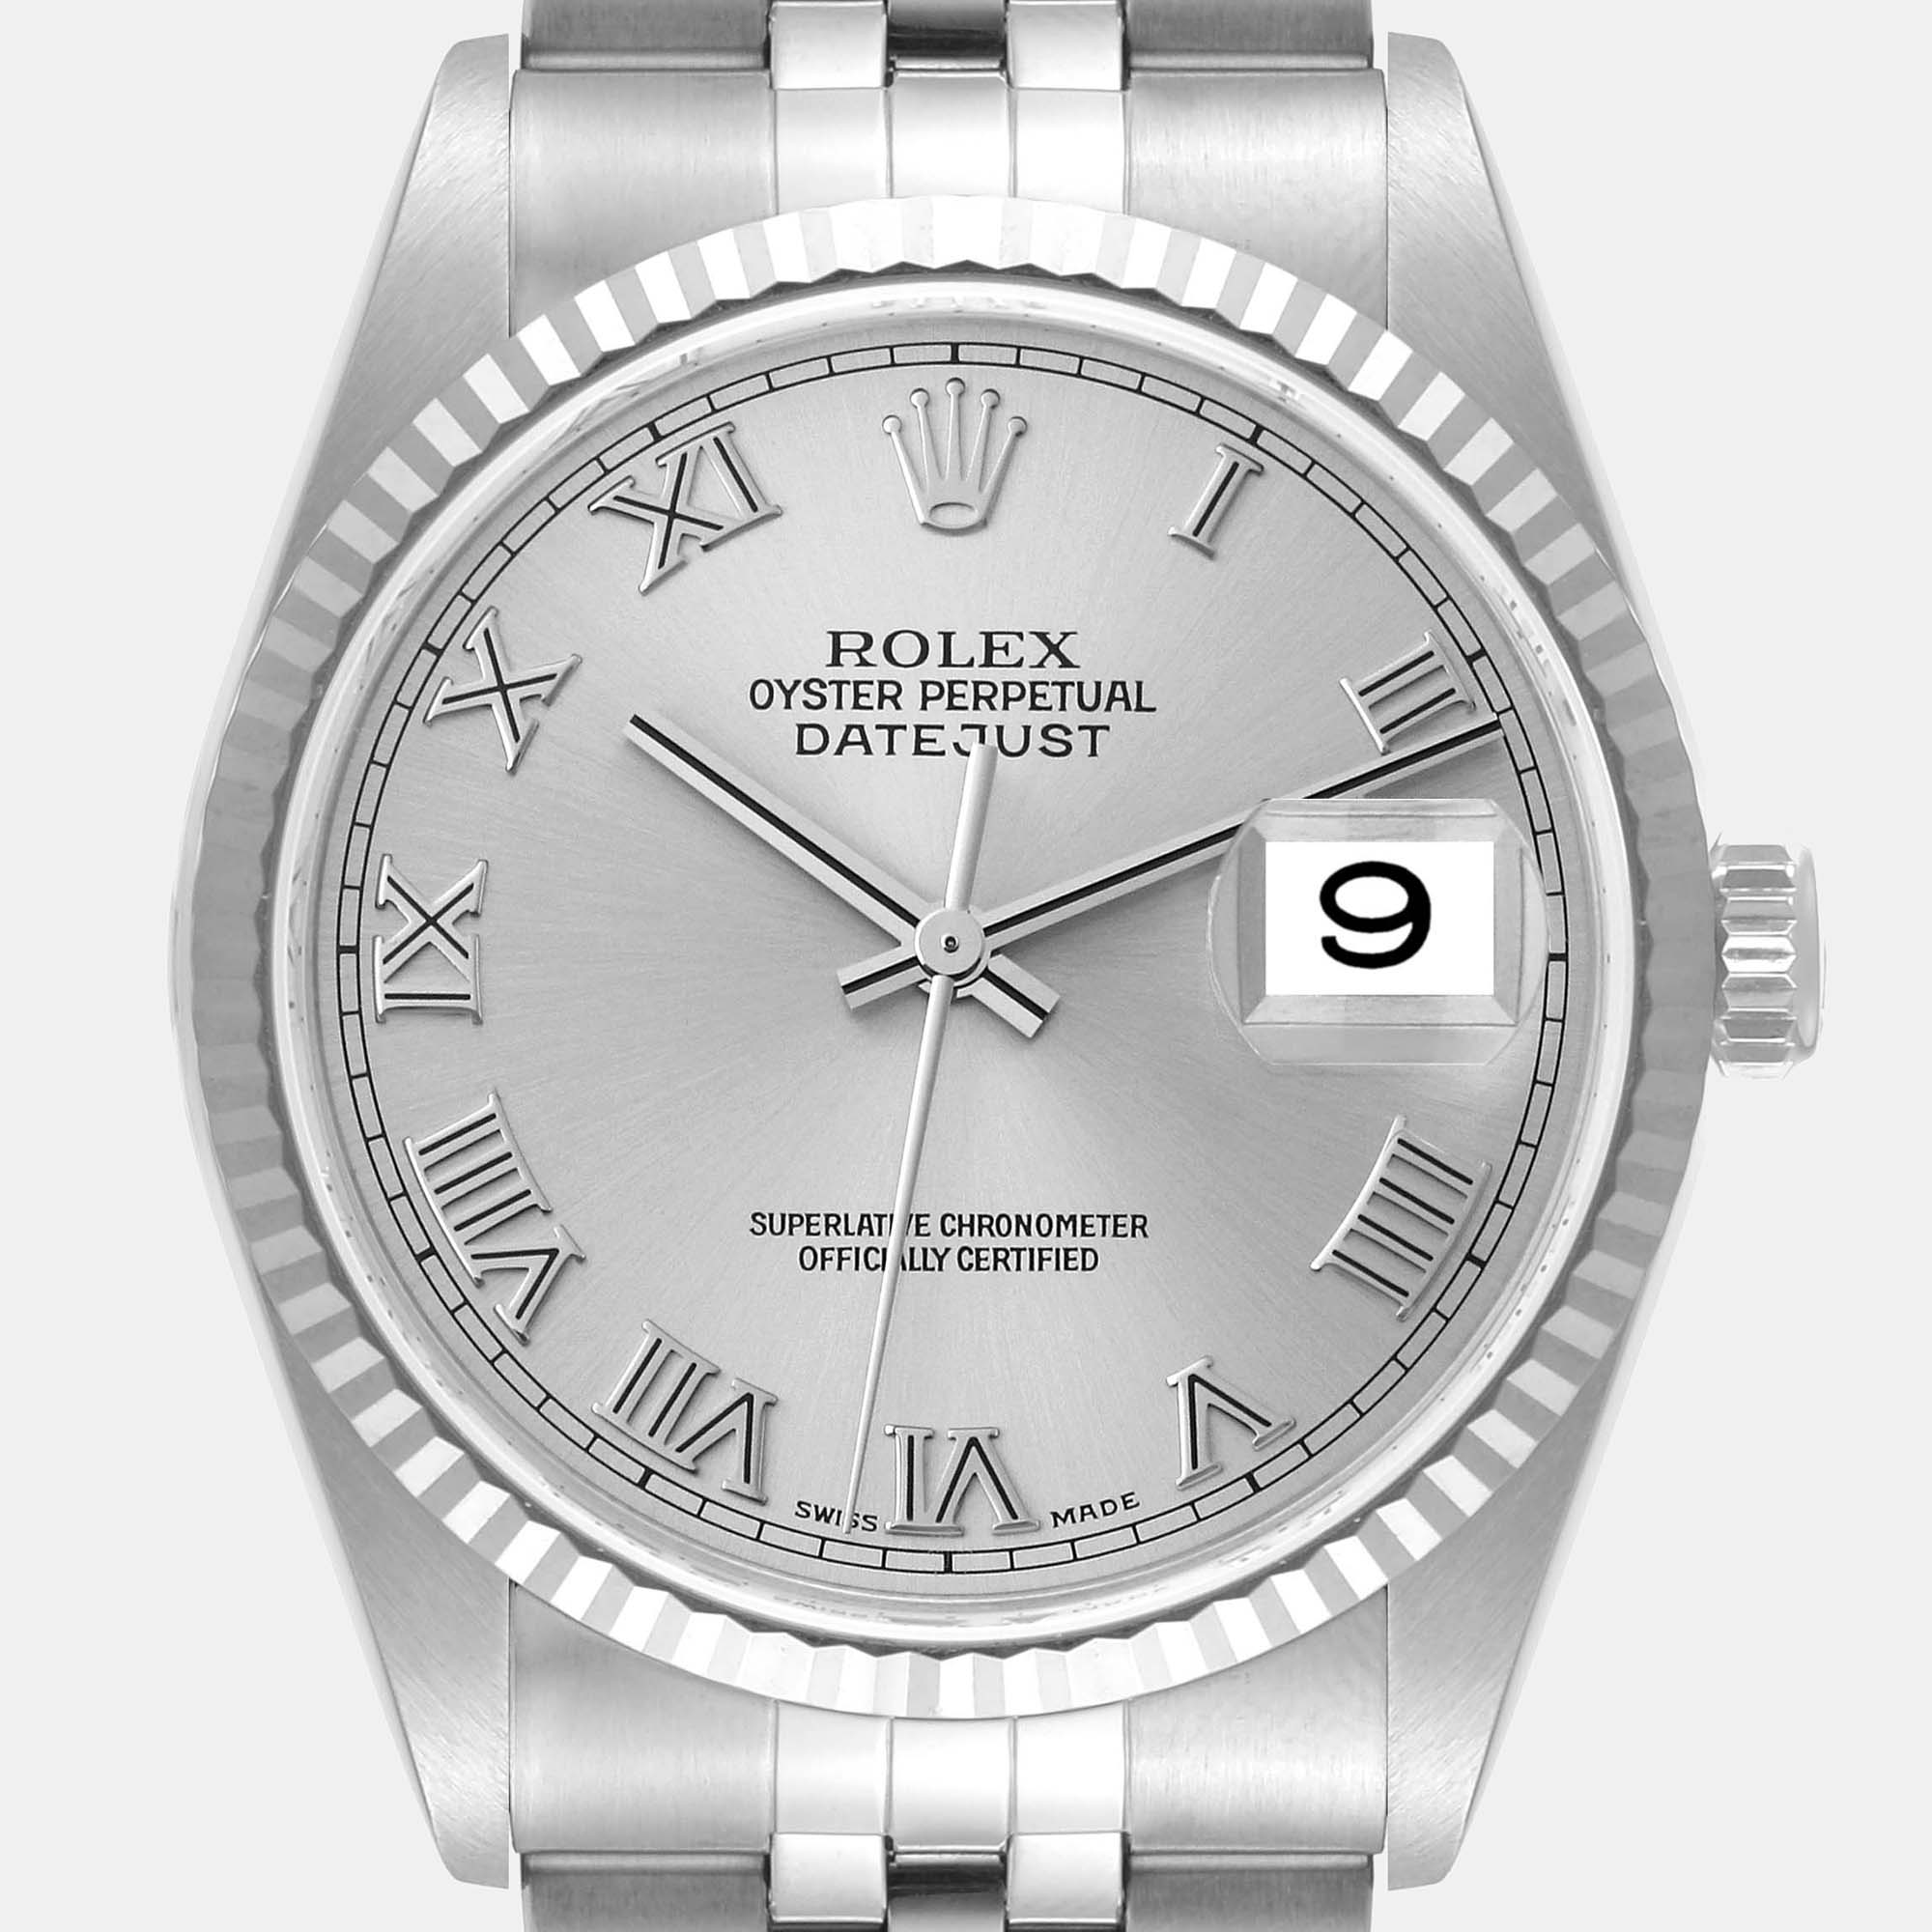 Rolex Datejust Steel White Gold Silver Roman Dial Mens Watch 16234